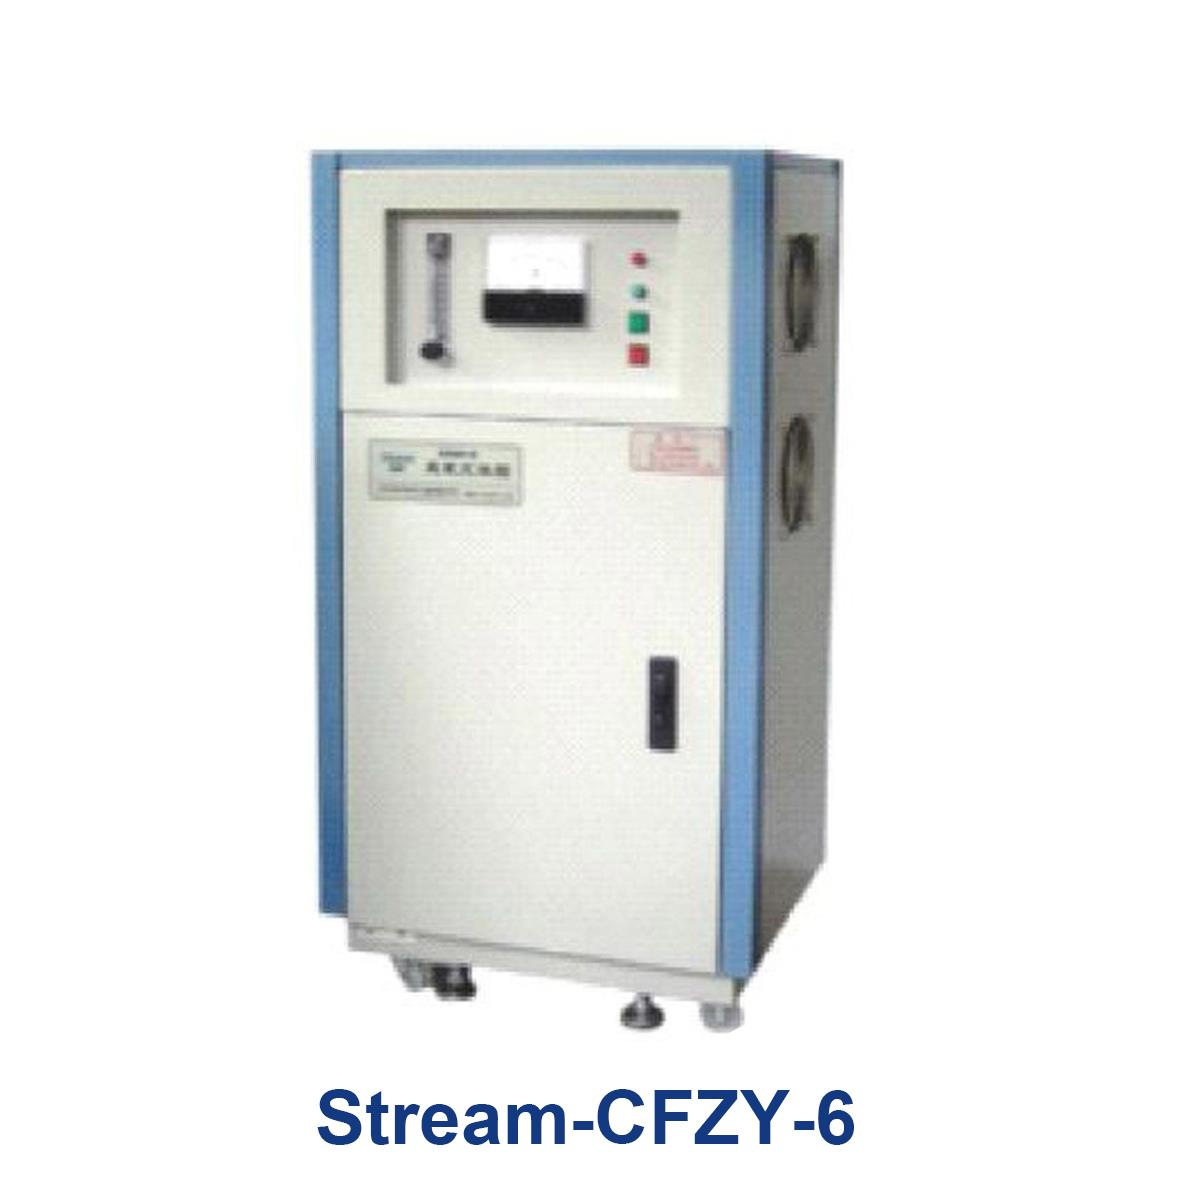 Stream-CFZY-6